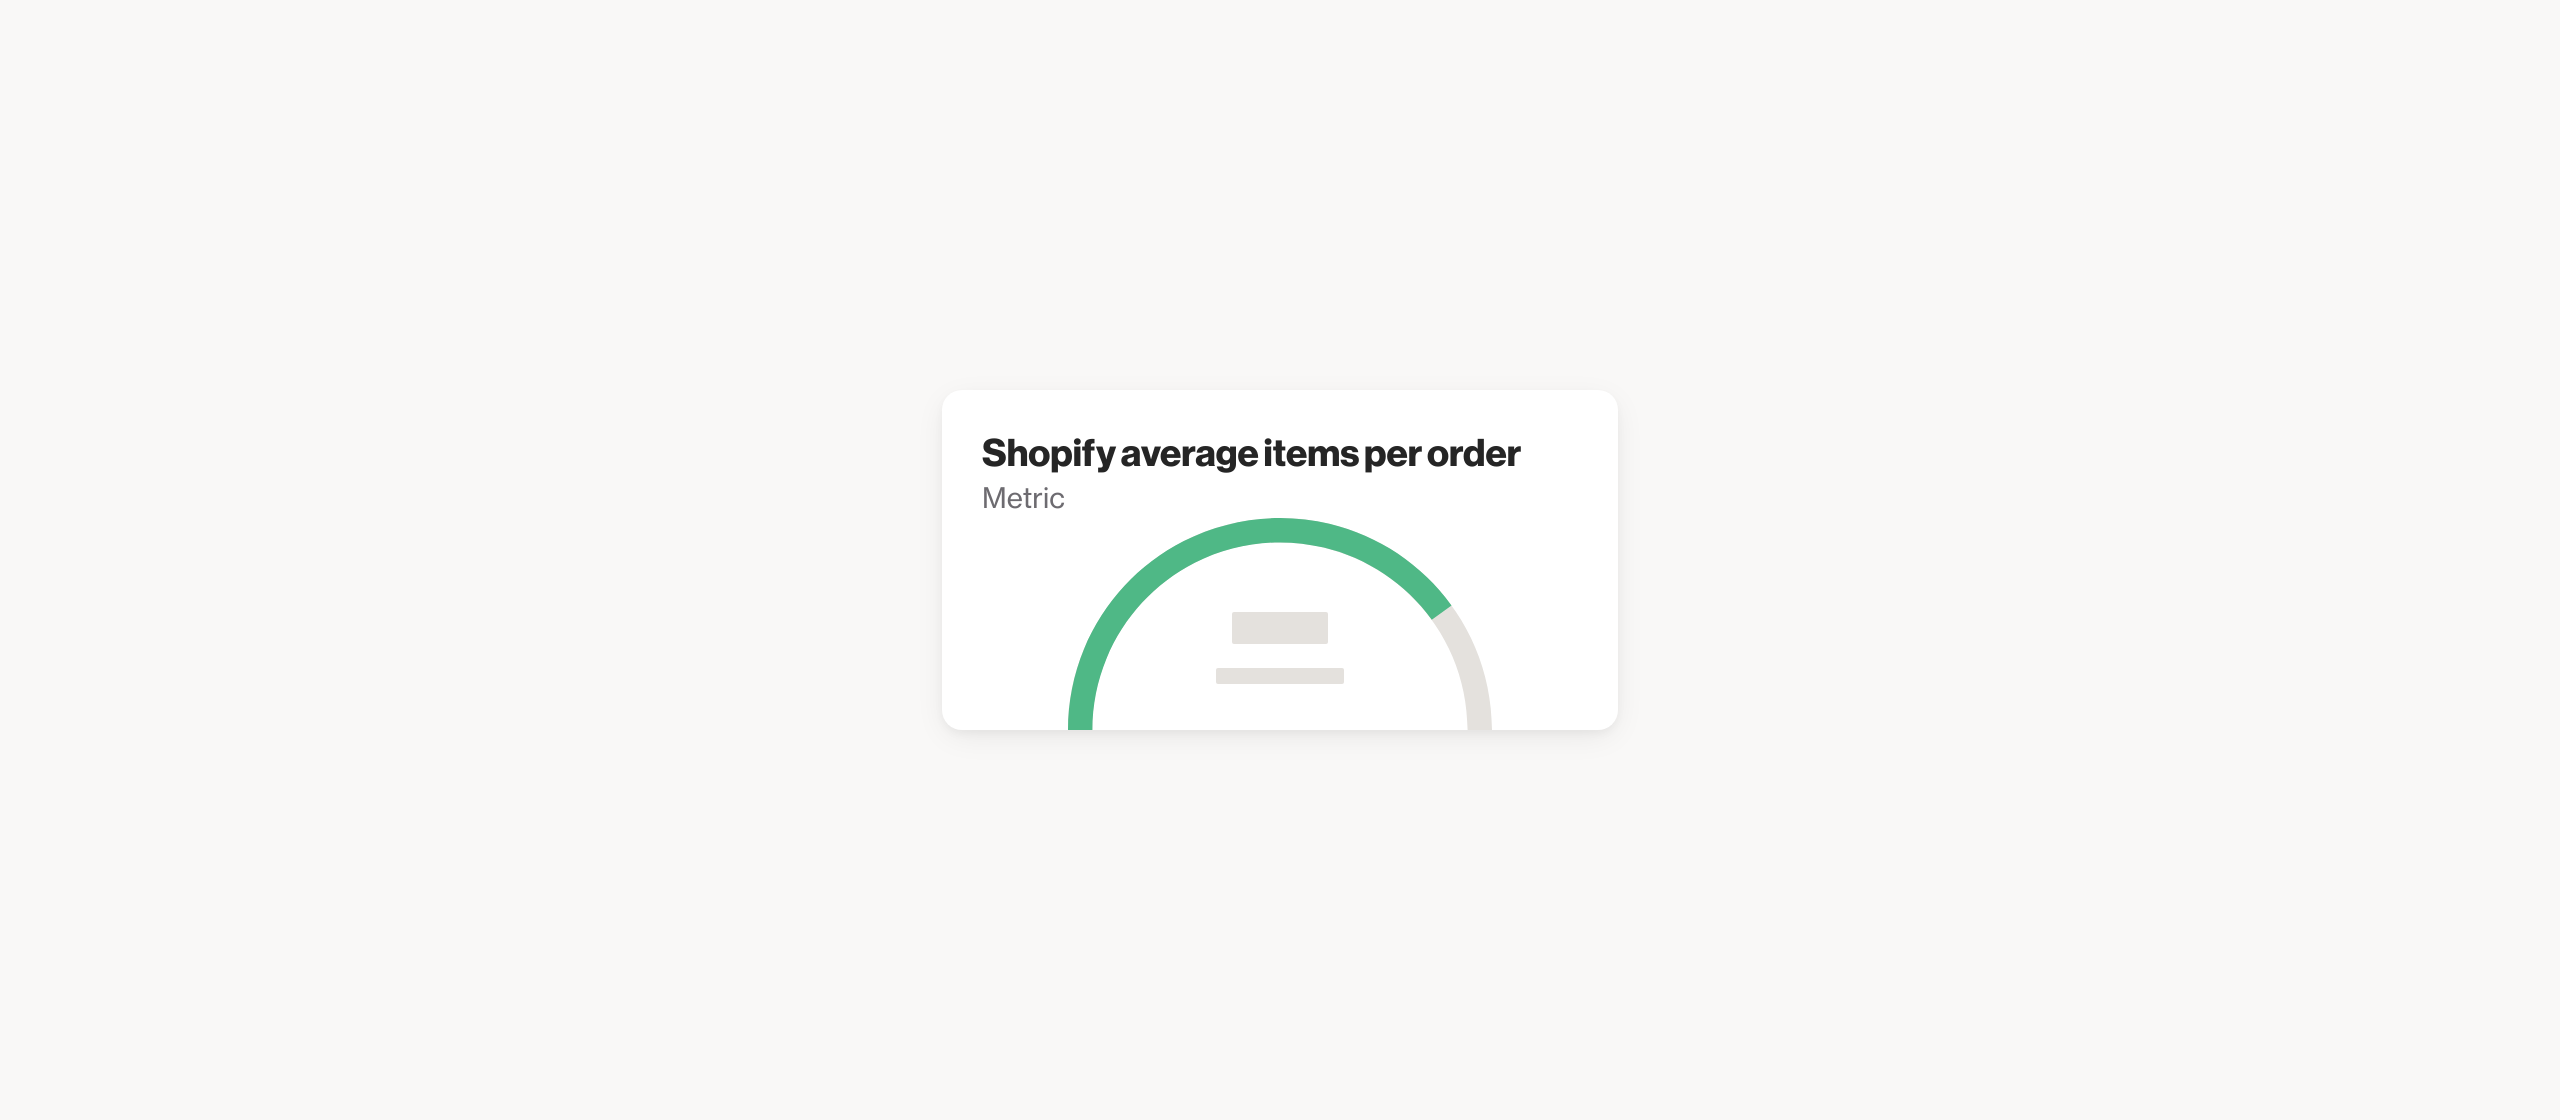 Shopify average items per order